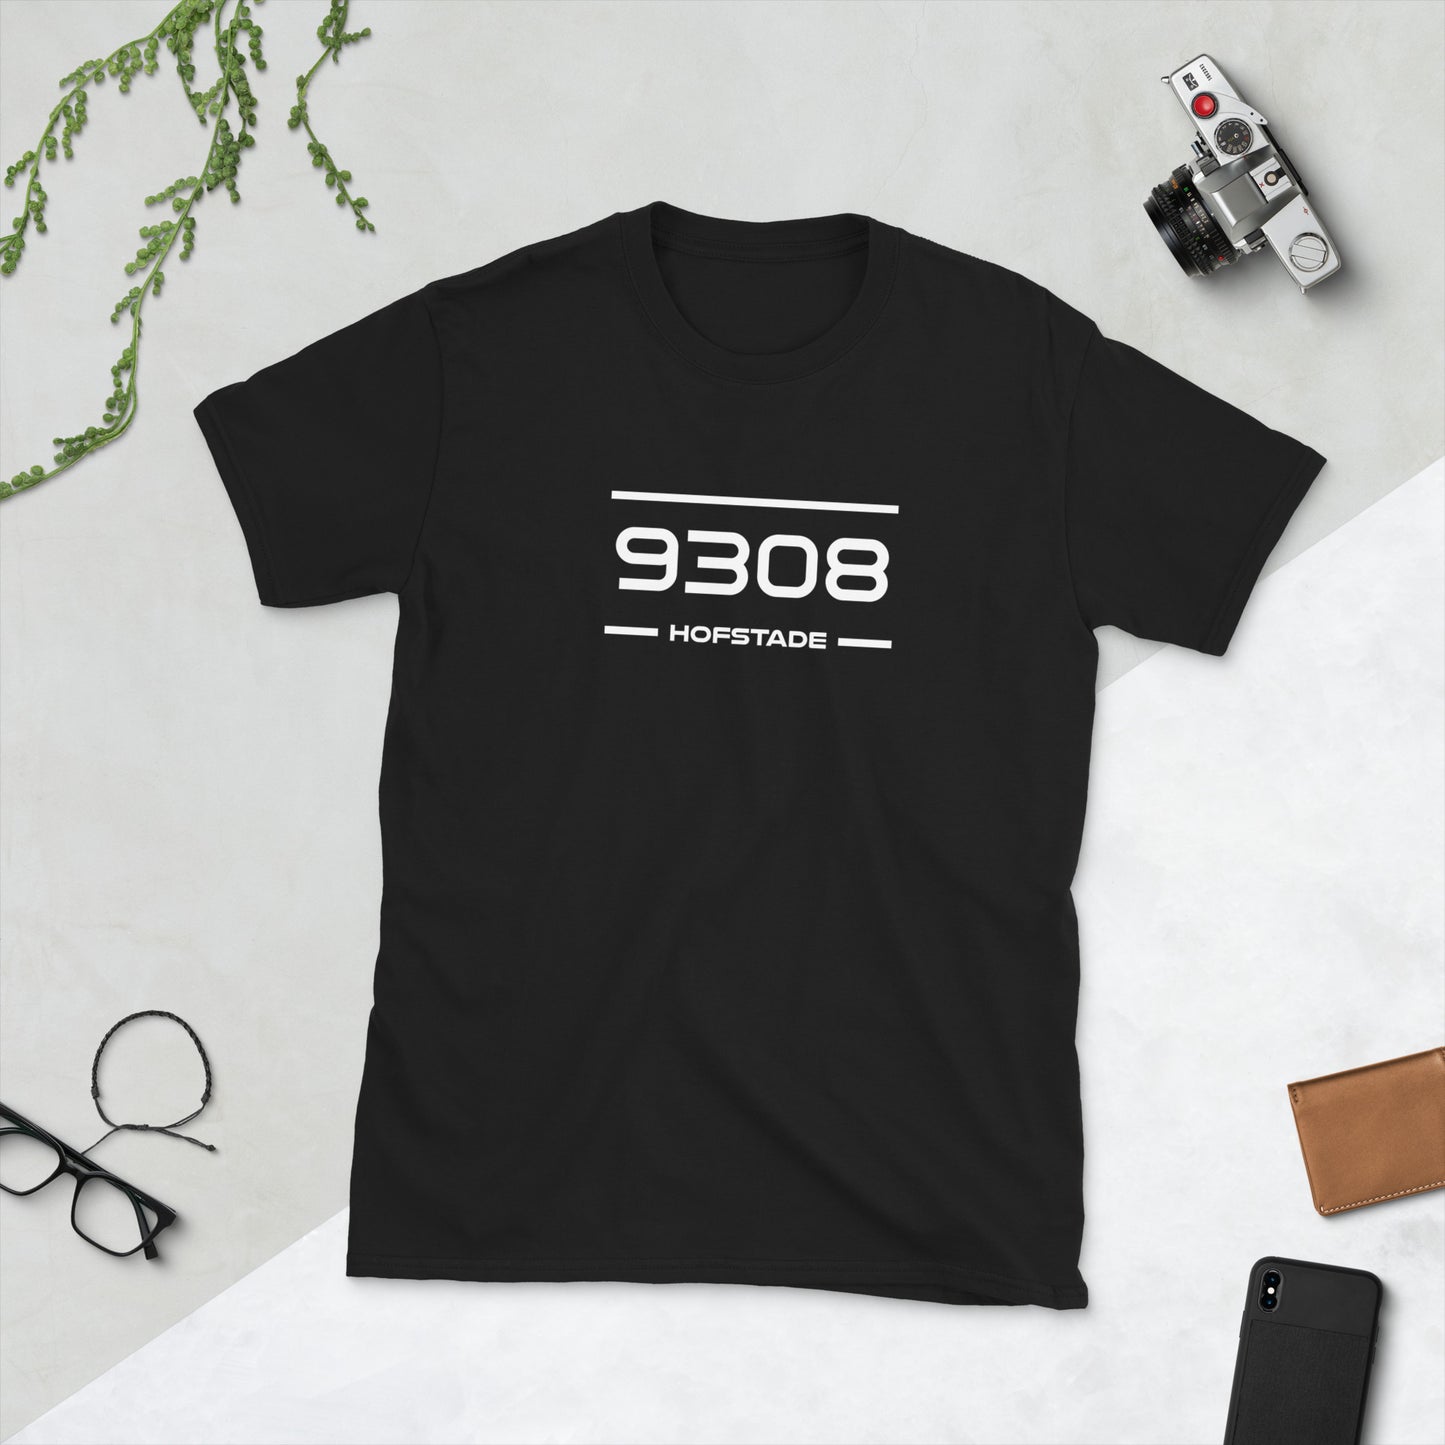 T-Shirt - 9308 - Hofstade